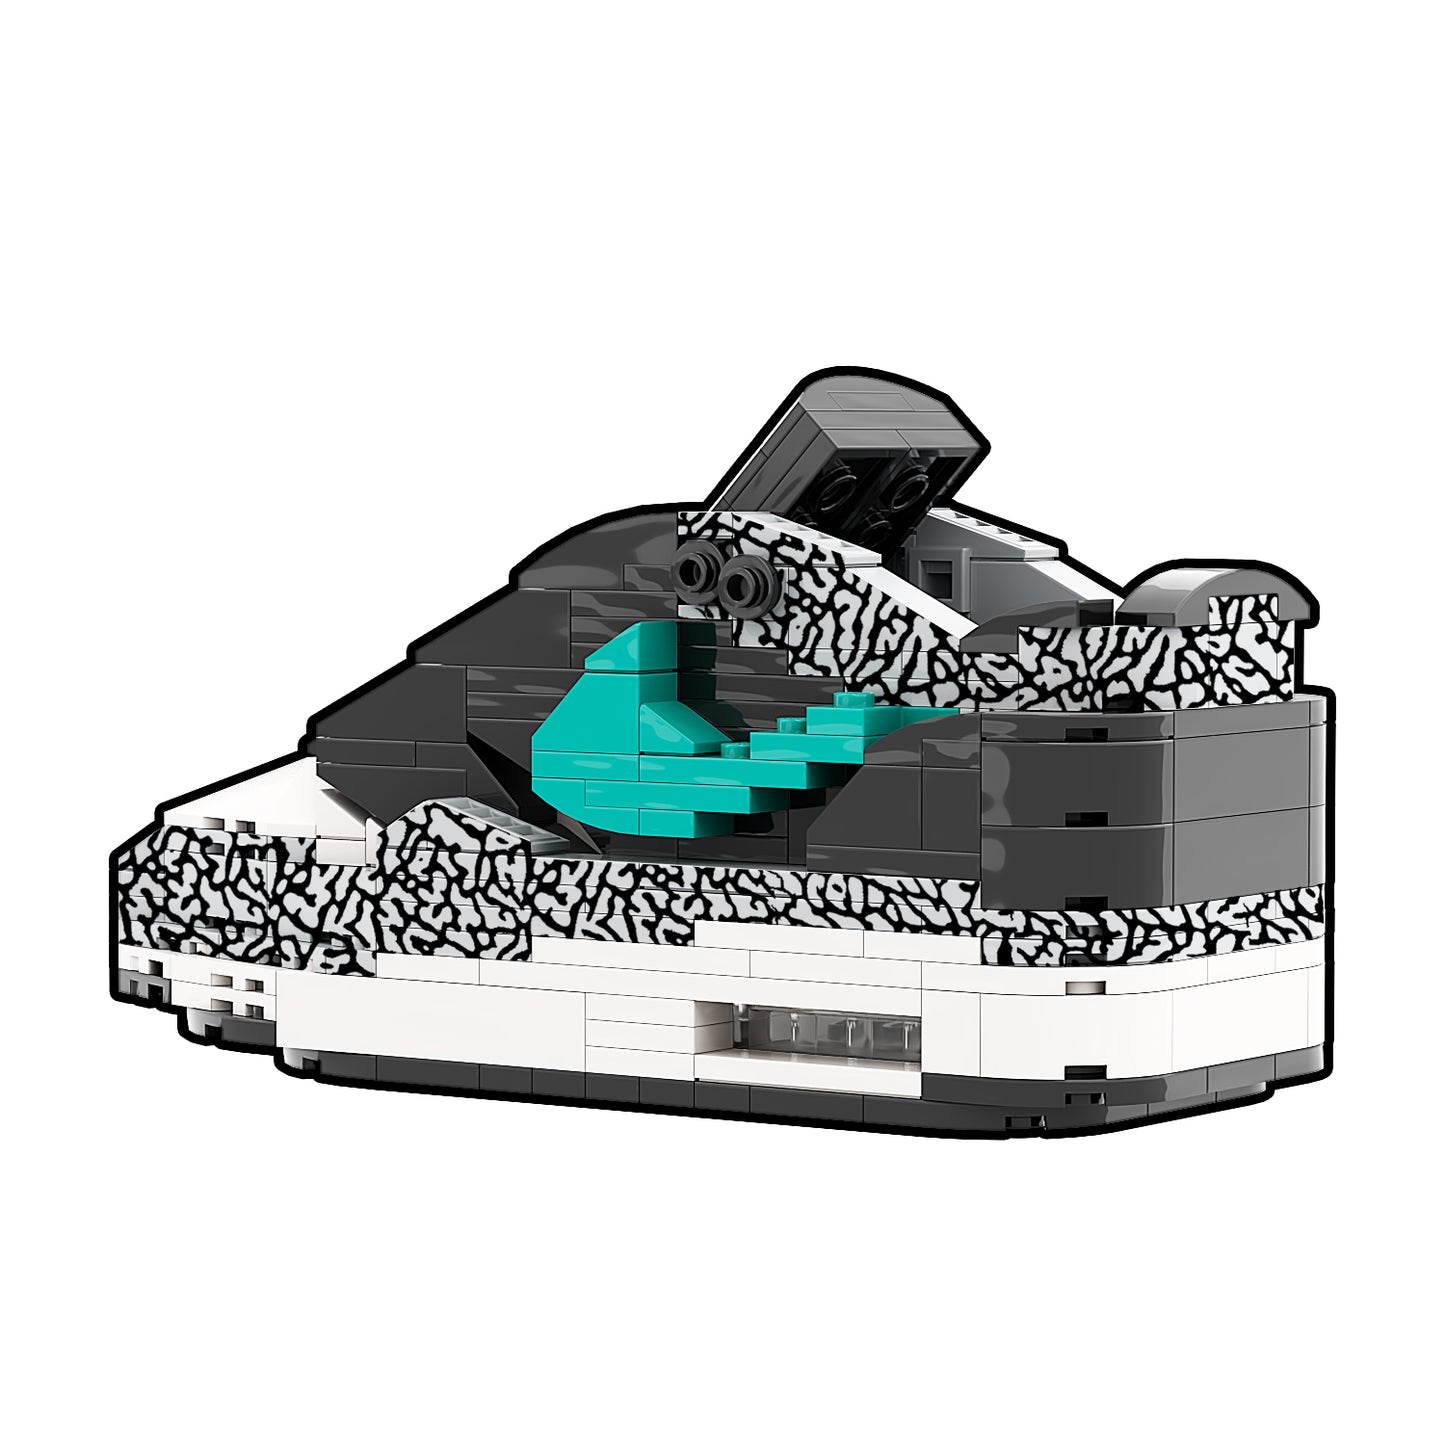 REGULAR Air Max 1 "Atmos" Sneaker Bricks with Mini Figure